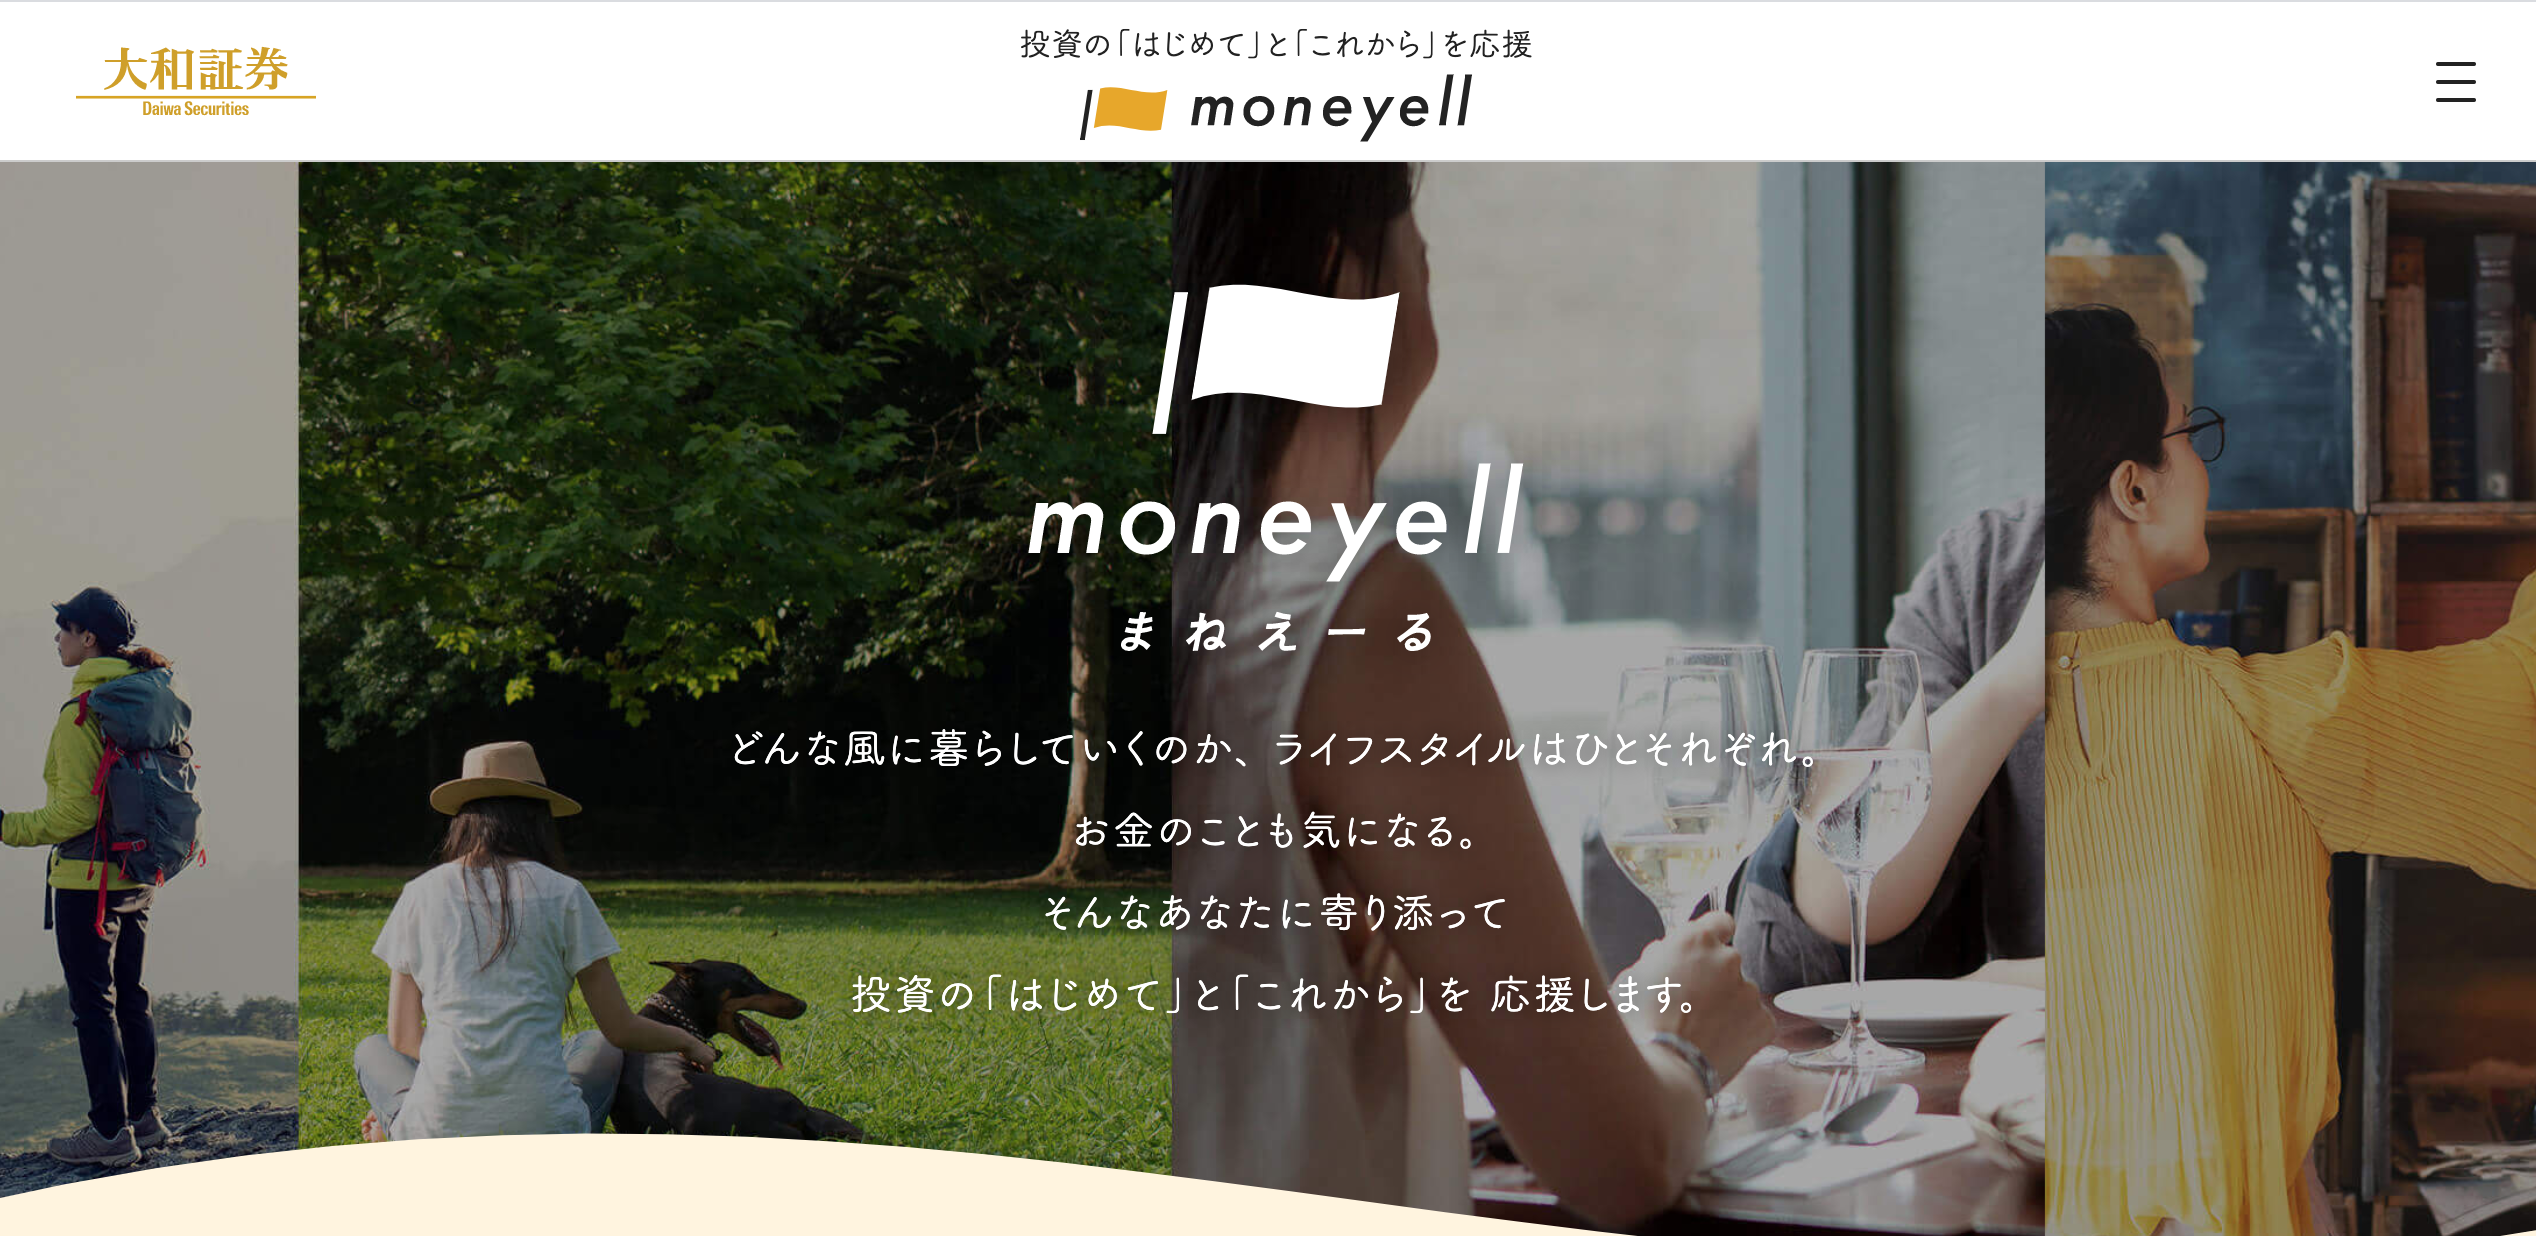 moneyell(まねえーる)